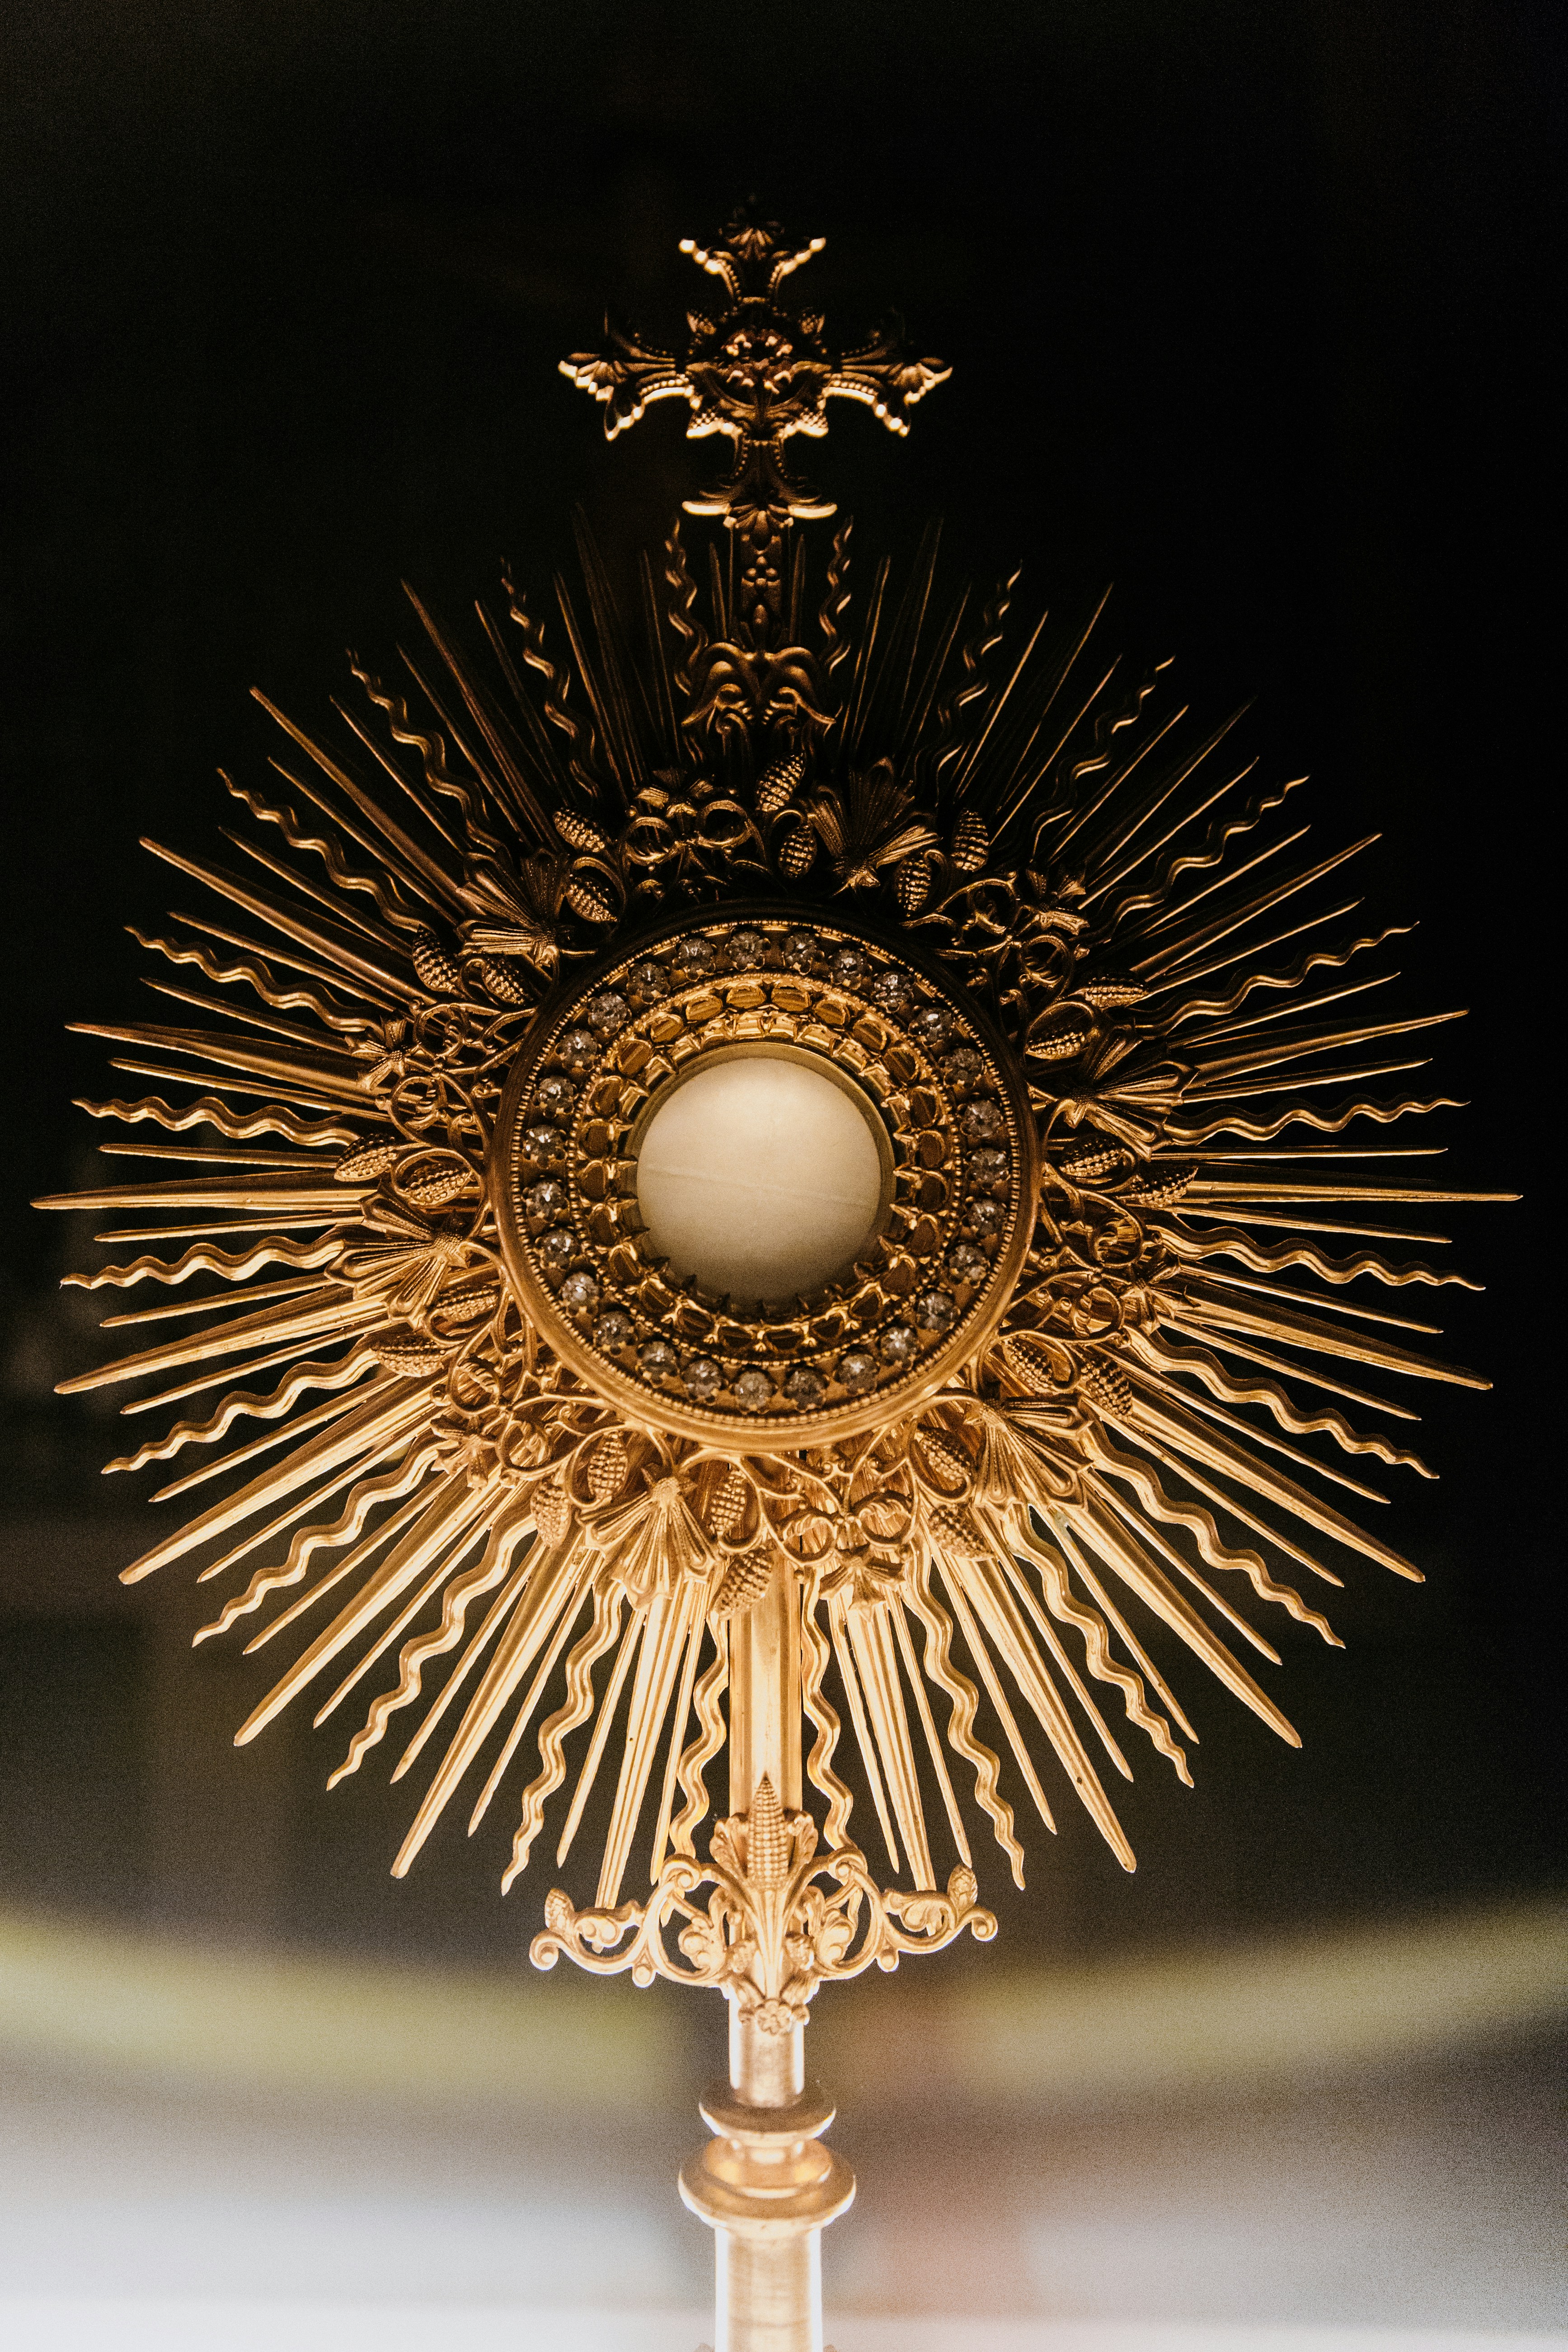 The Eucharist is \